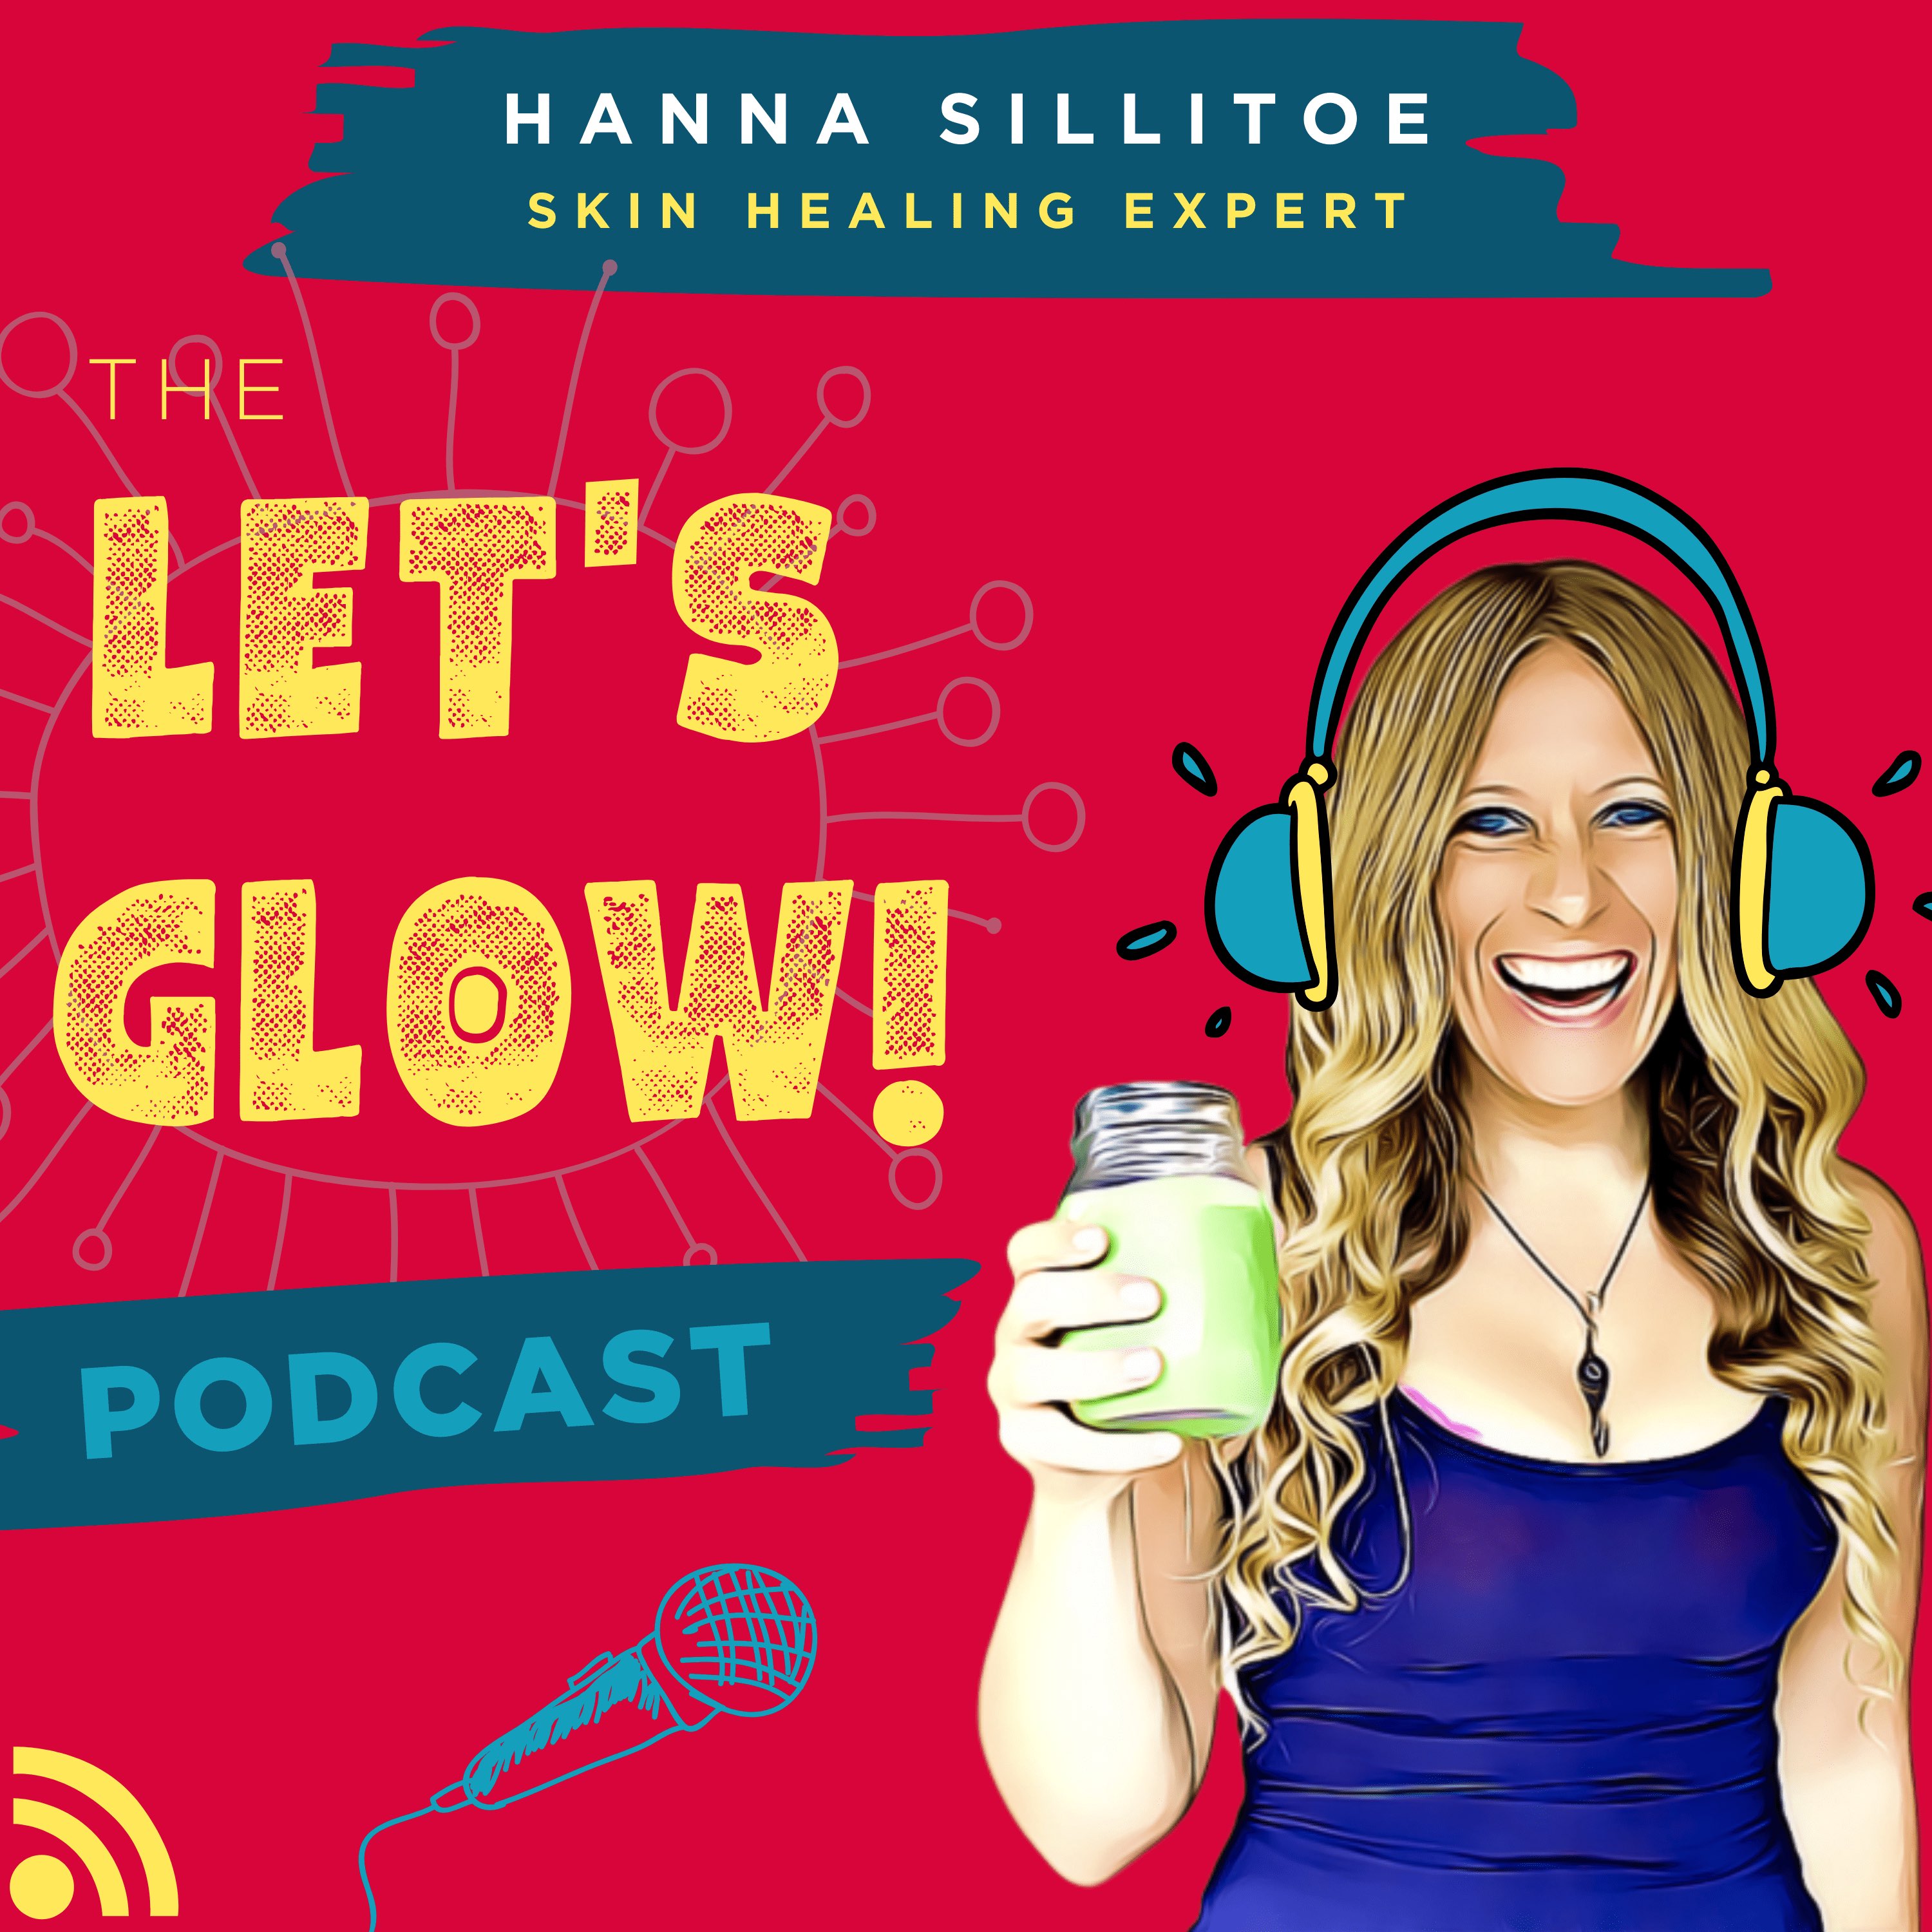 Let's Glow Hanna Sillitoe